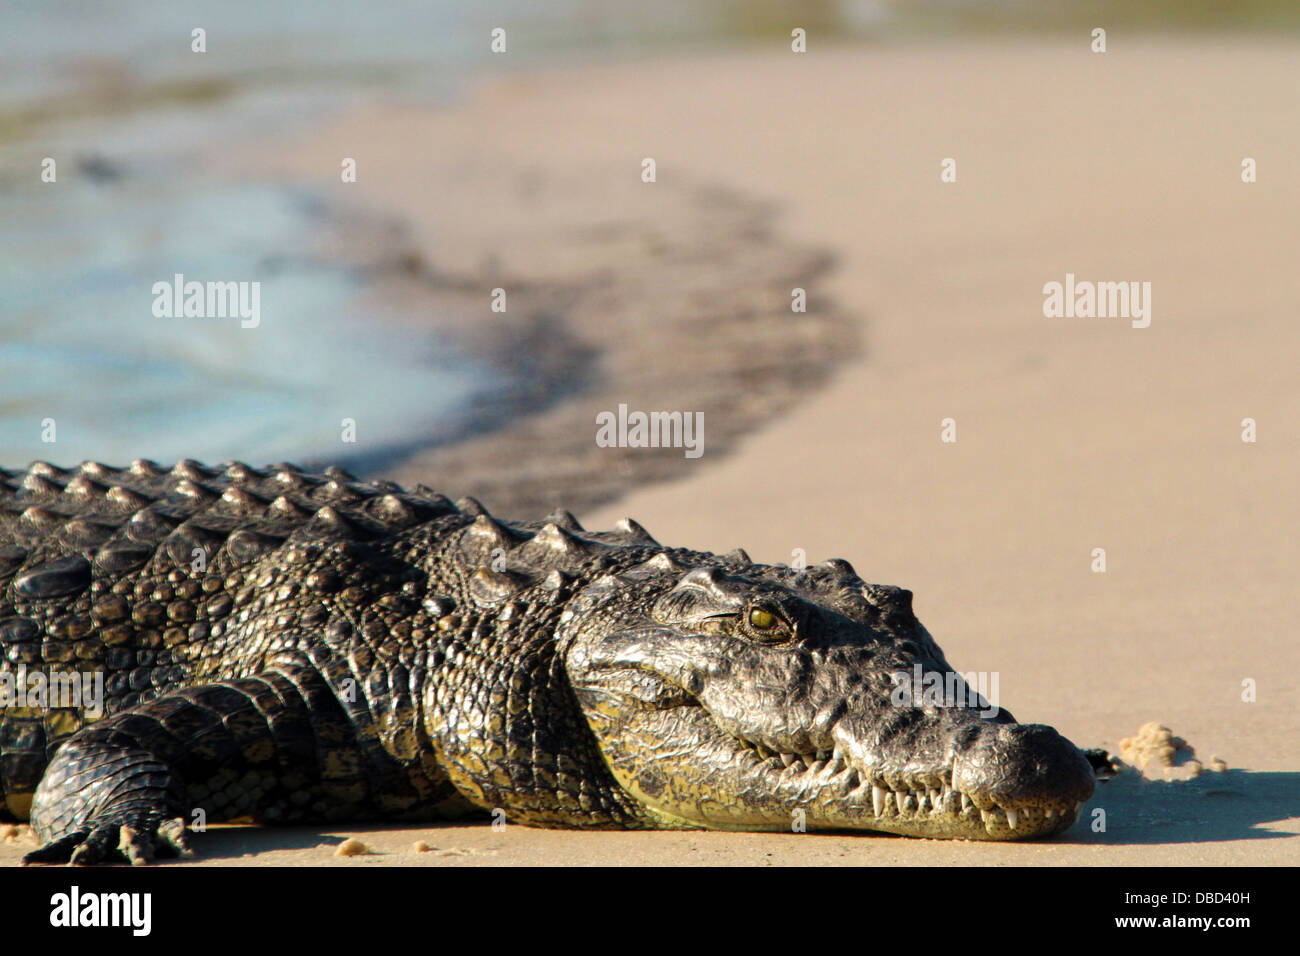 A nile croc basking on a sandbank Stock Photo